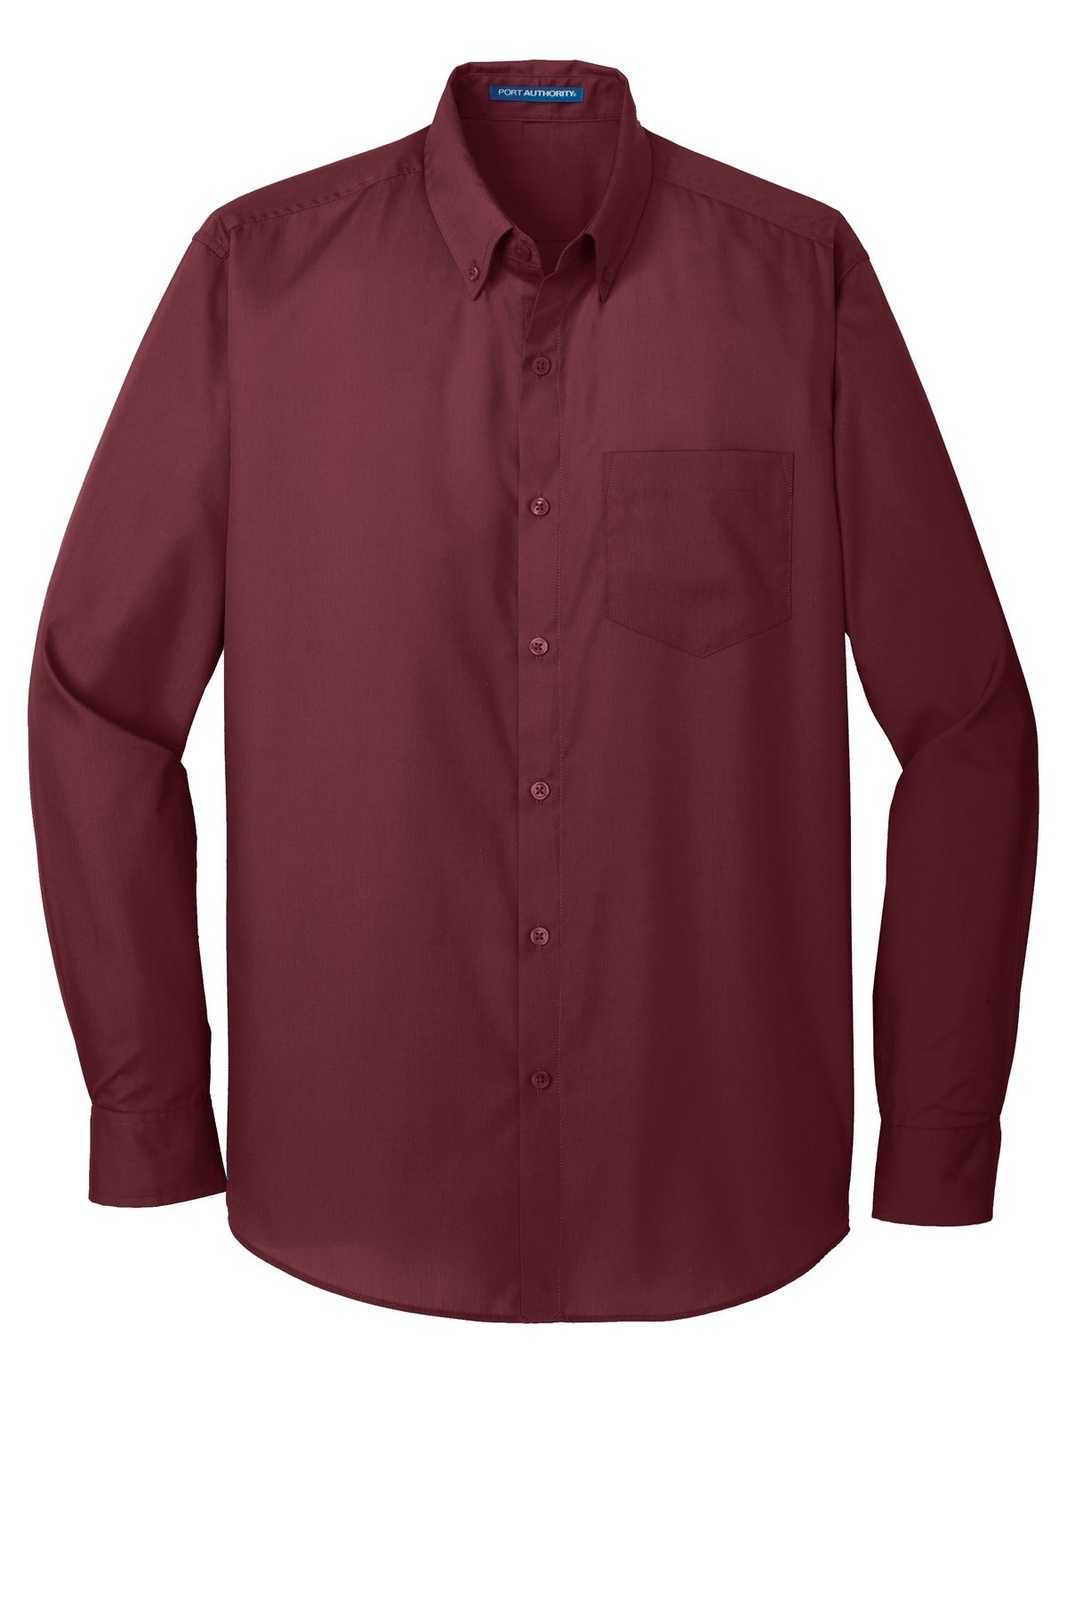 Port Authority W100 Long Sleeve Carefree Poplin Shirt - Burgundy - HIT a Double - 5